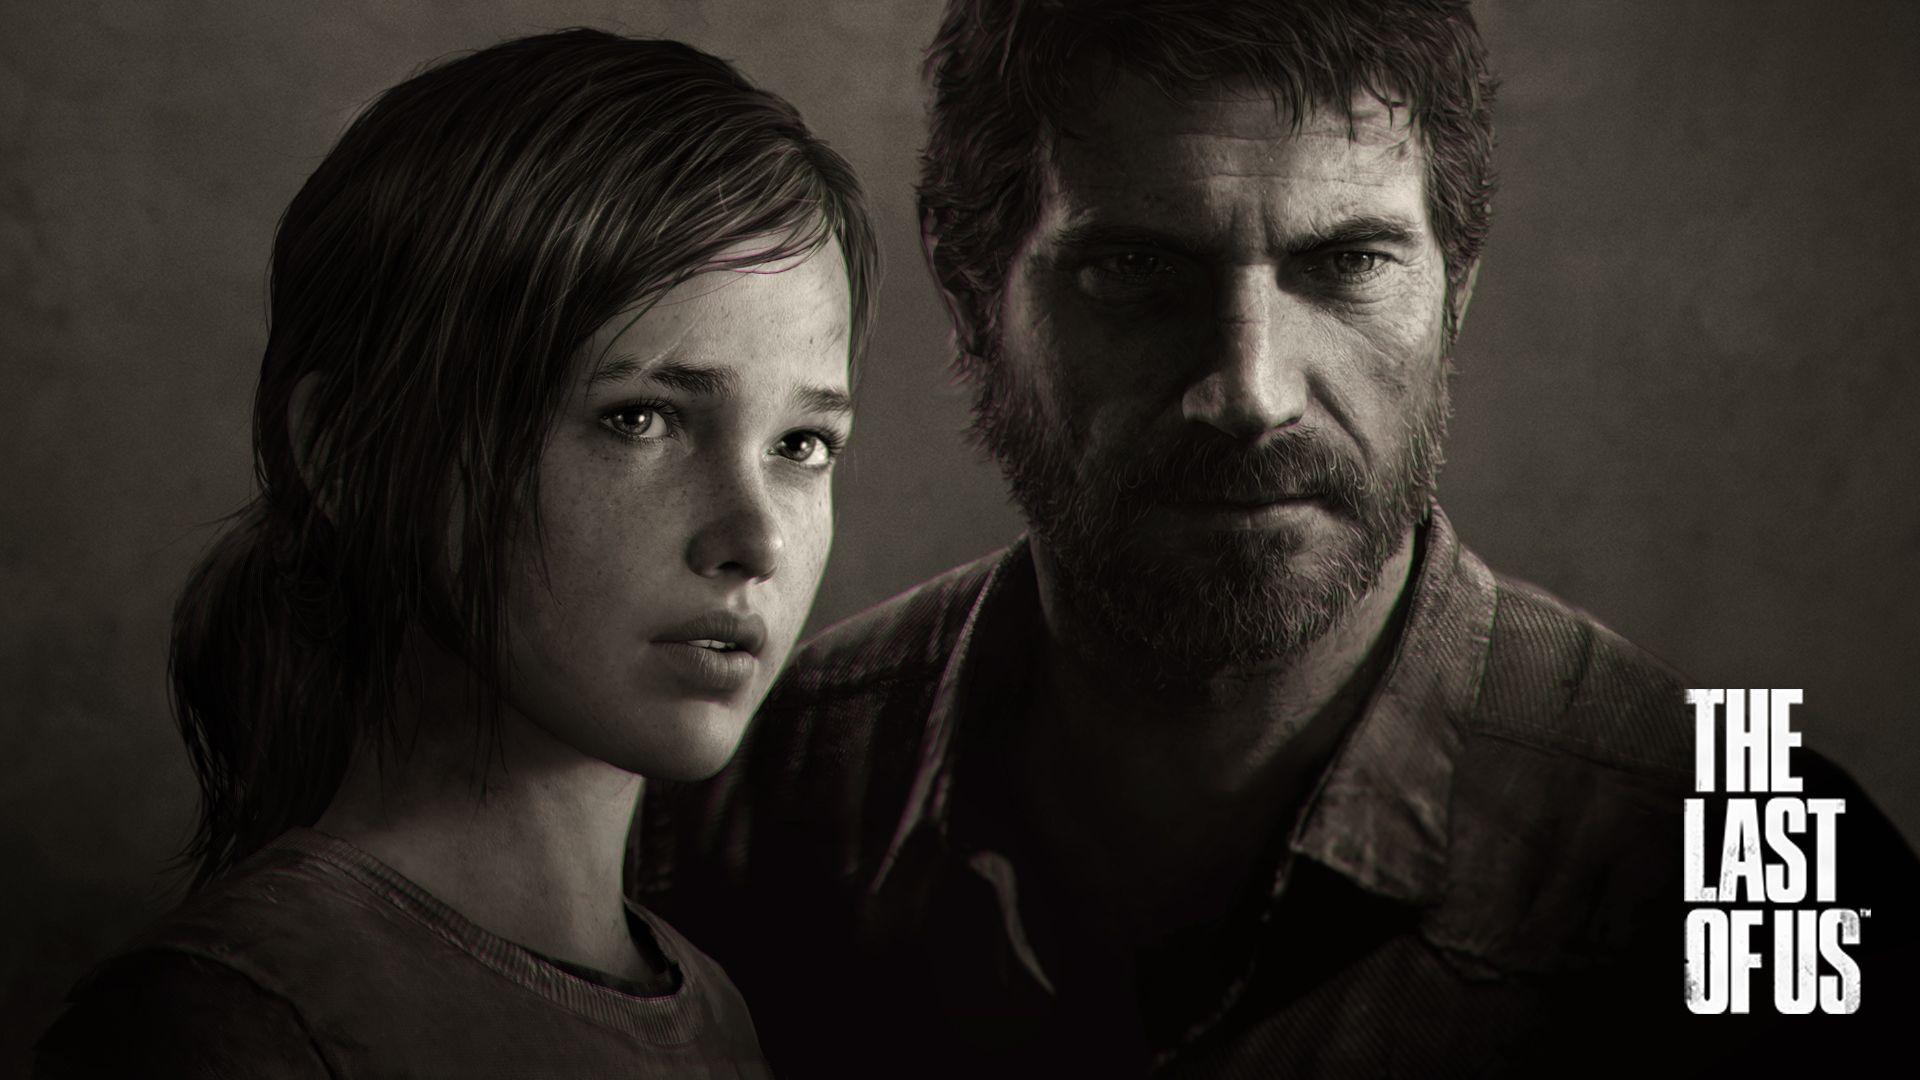 HD wallpaper: Joel, The Last of Us, the last of us part II, The Last of Us  2, Wallpaper Flare